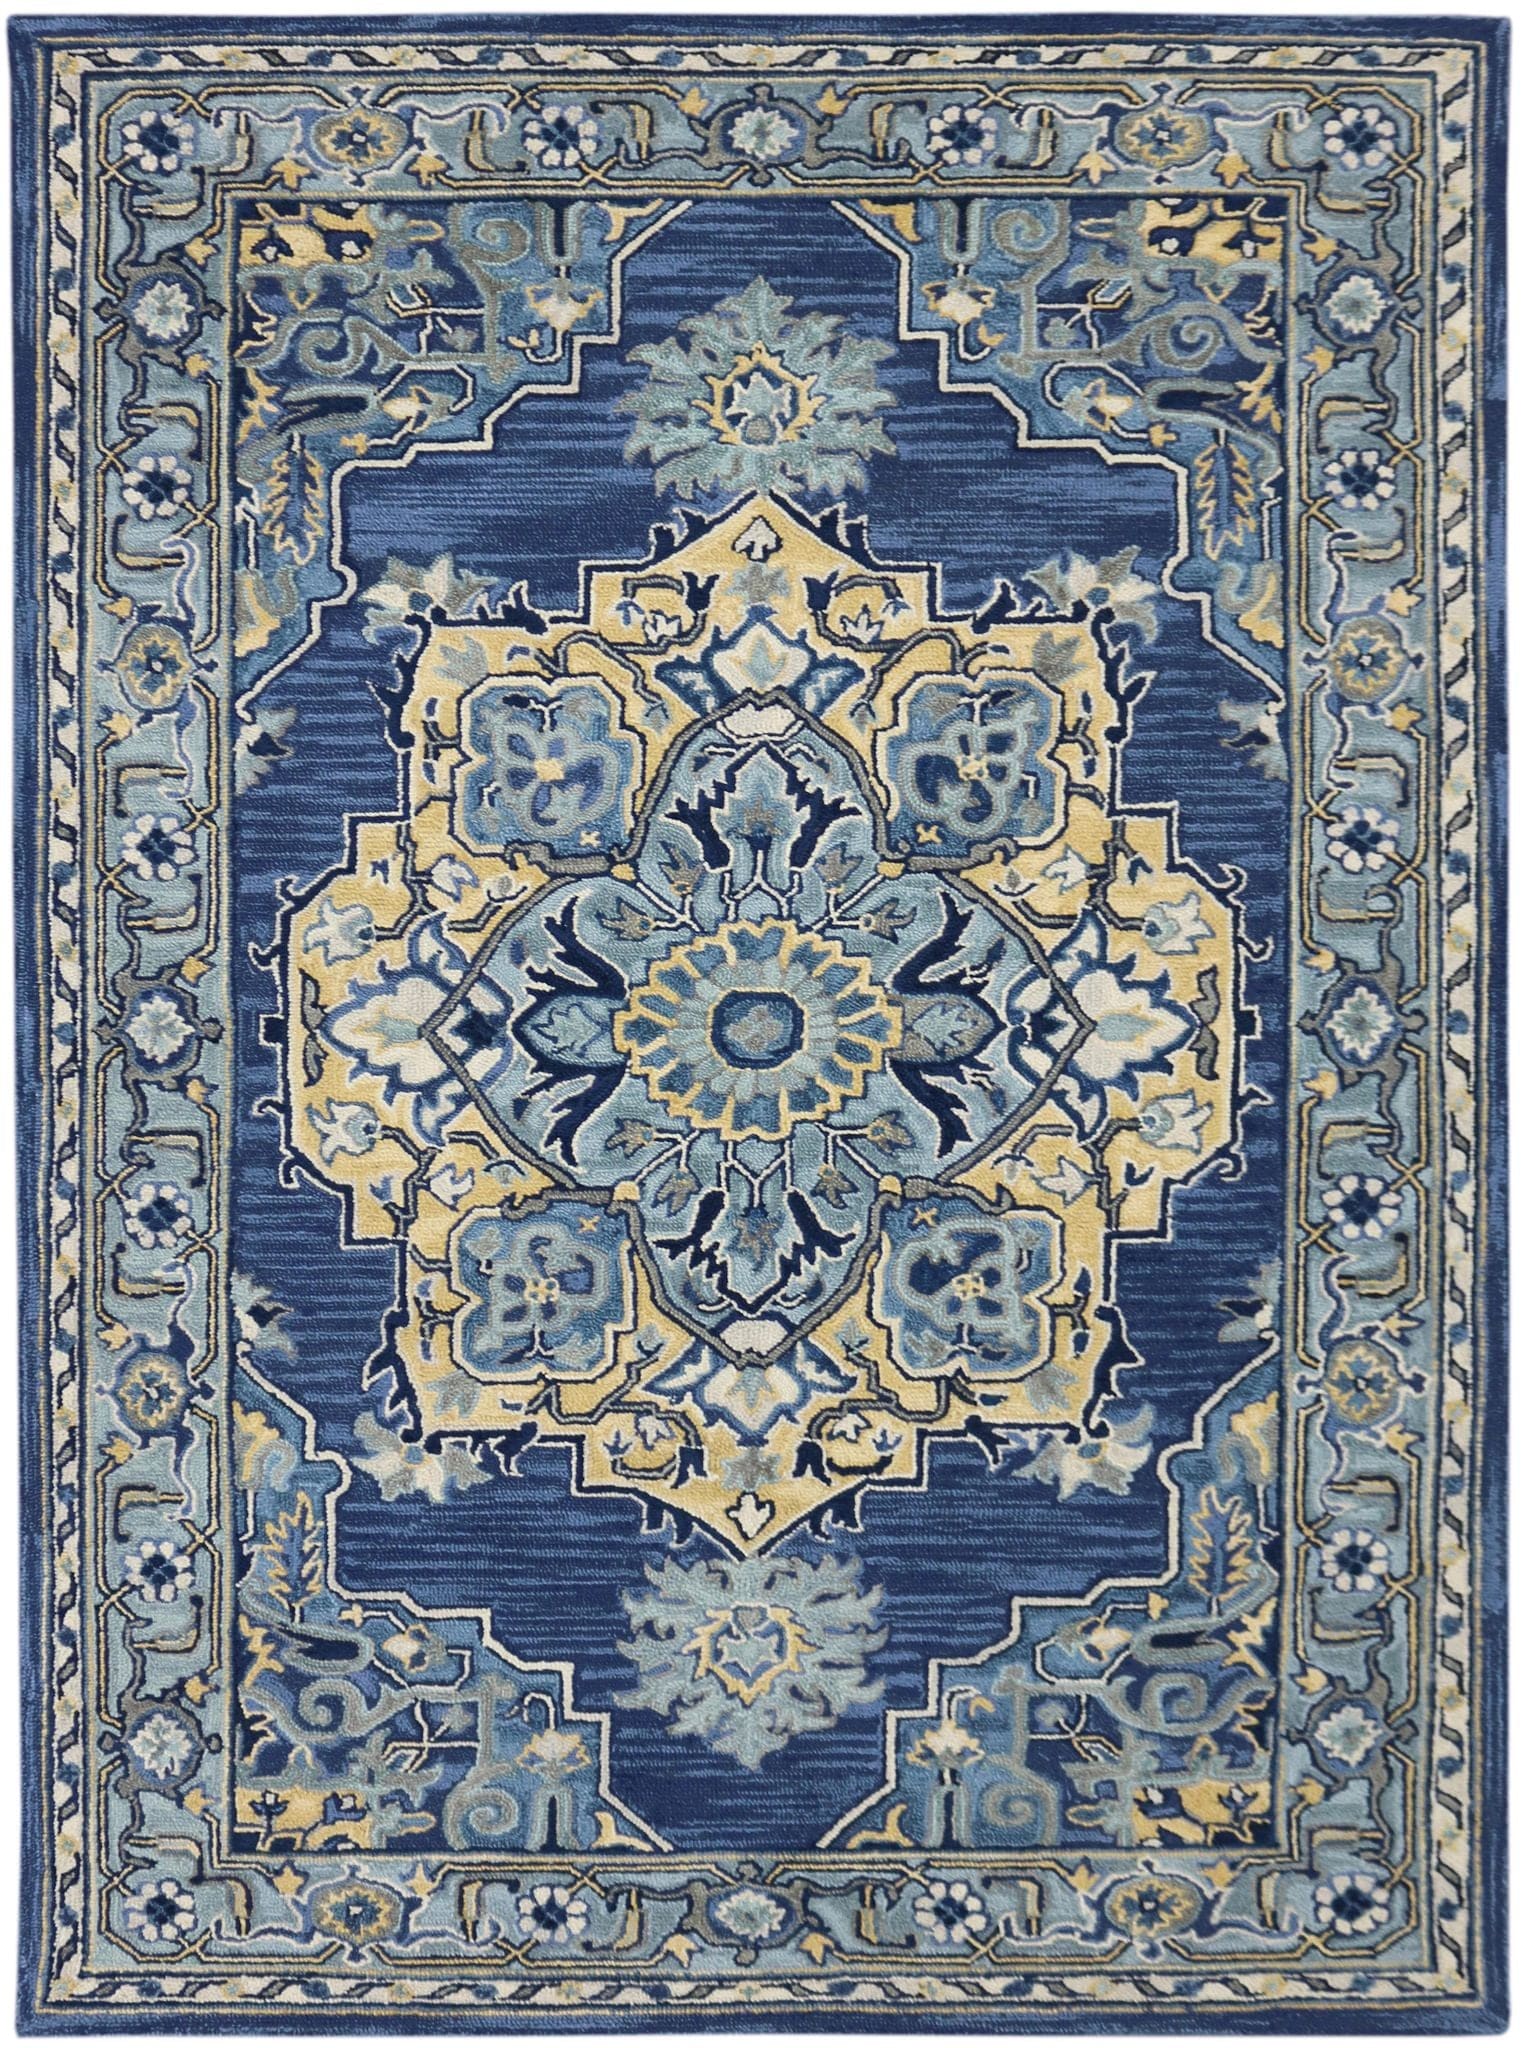 STEEL BLUE Wool Boho 5X8 Feet  Hand-Tufted Carpet - Rug